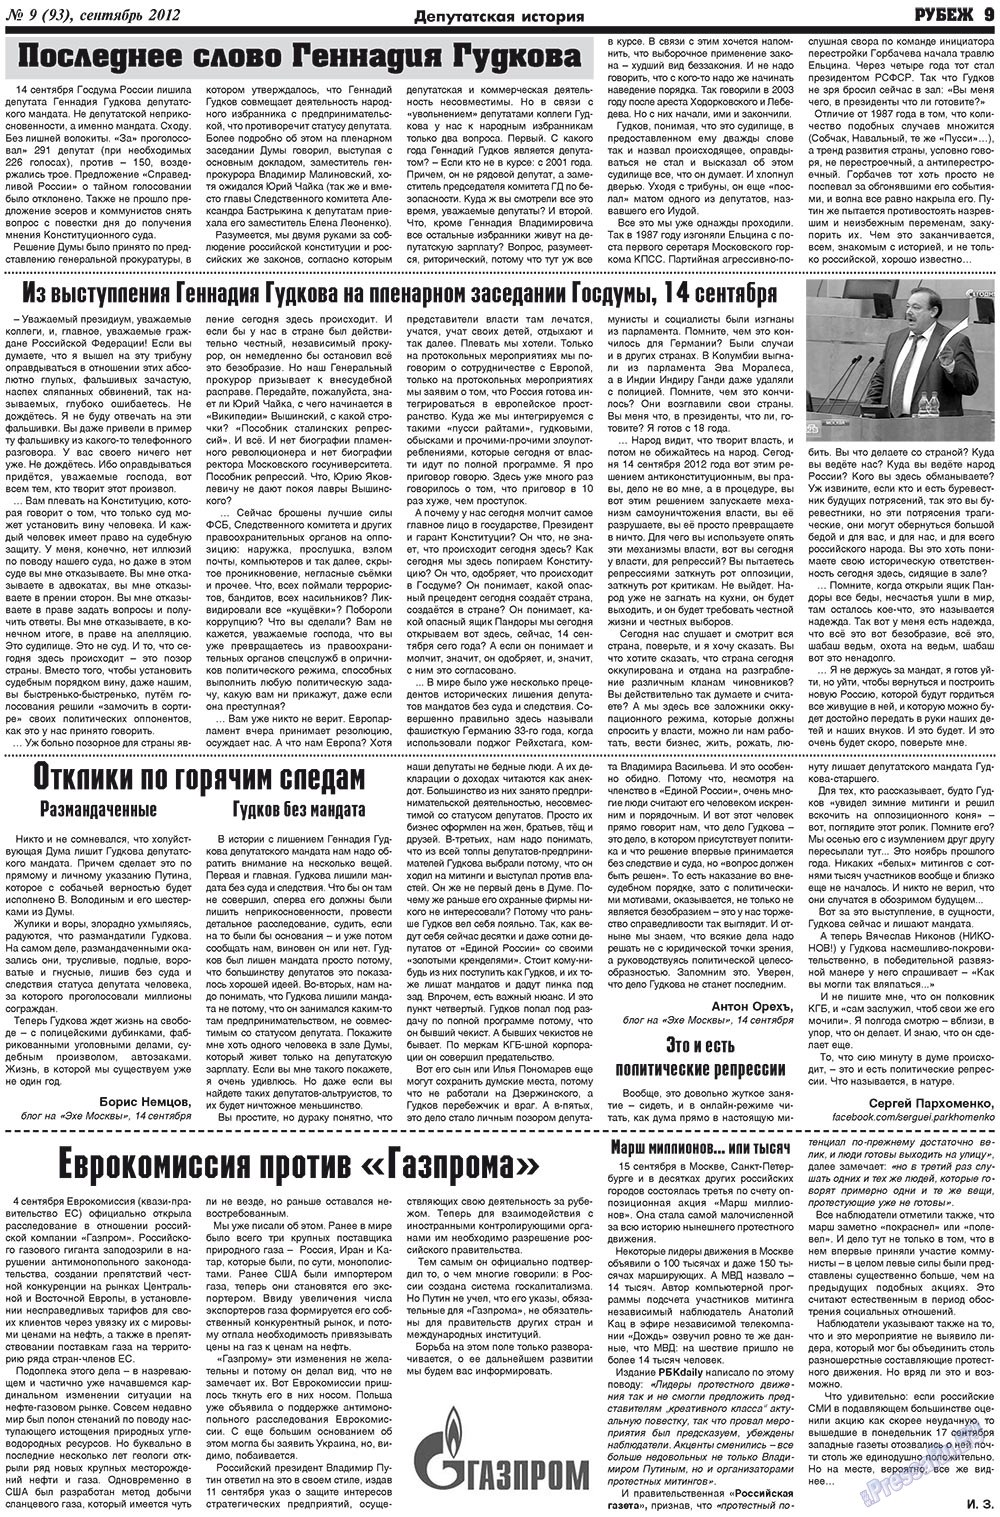 Рубеж, газета. 2012 №9 стр.9